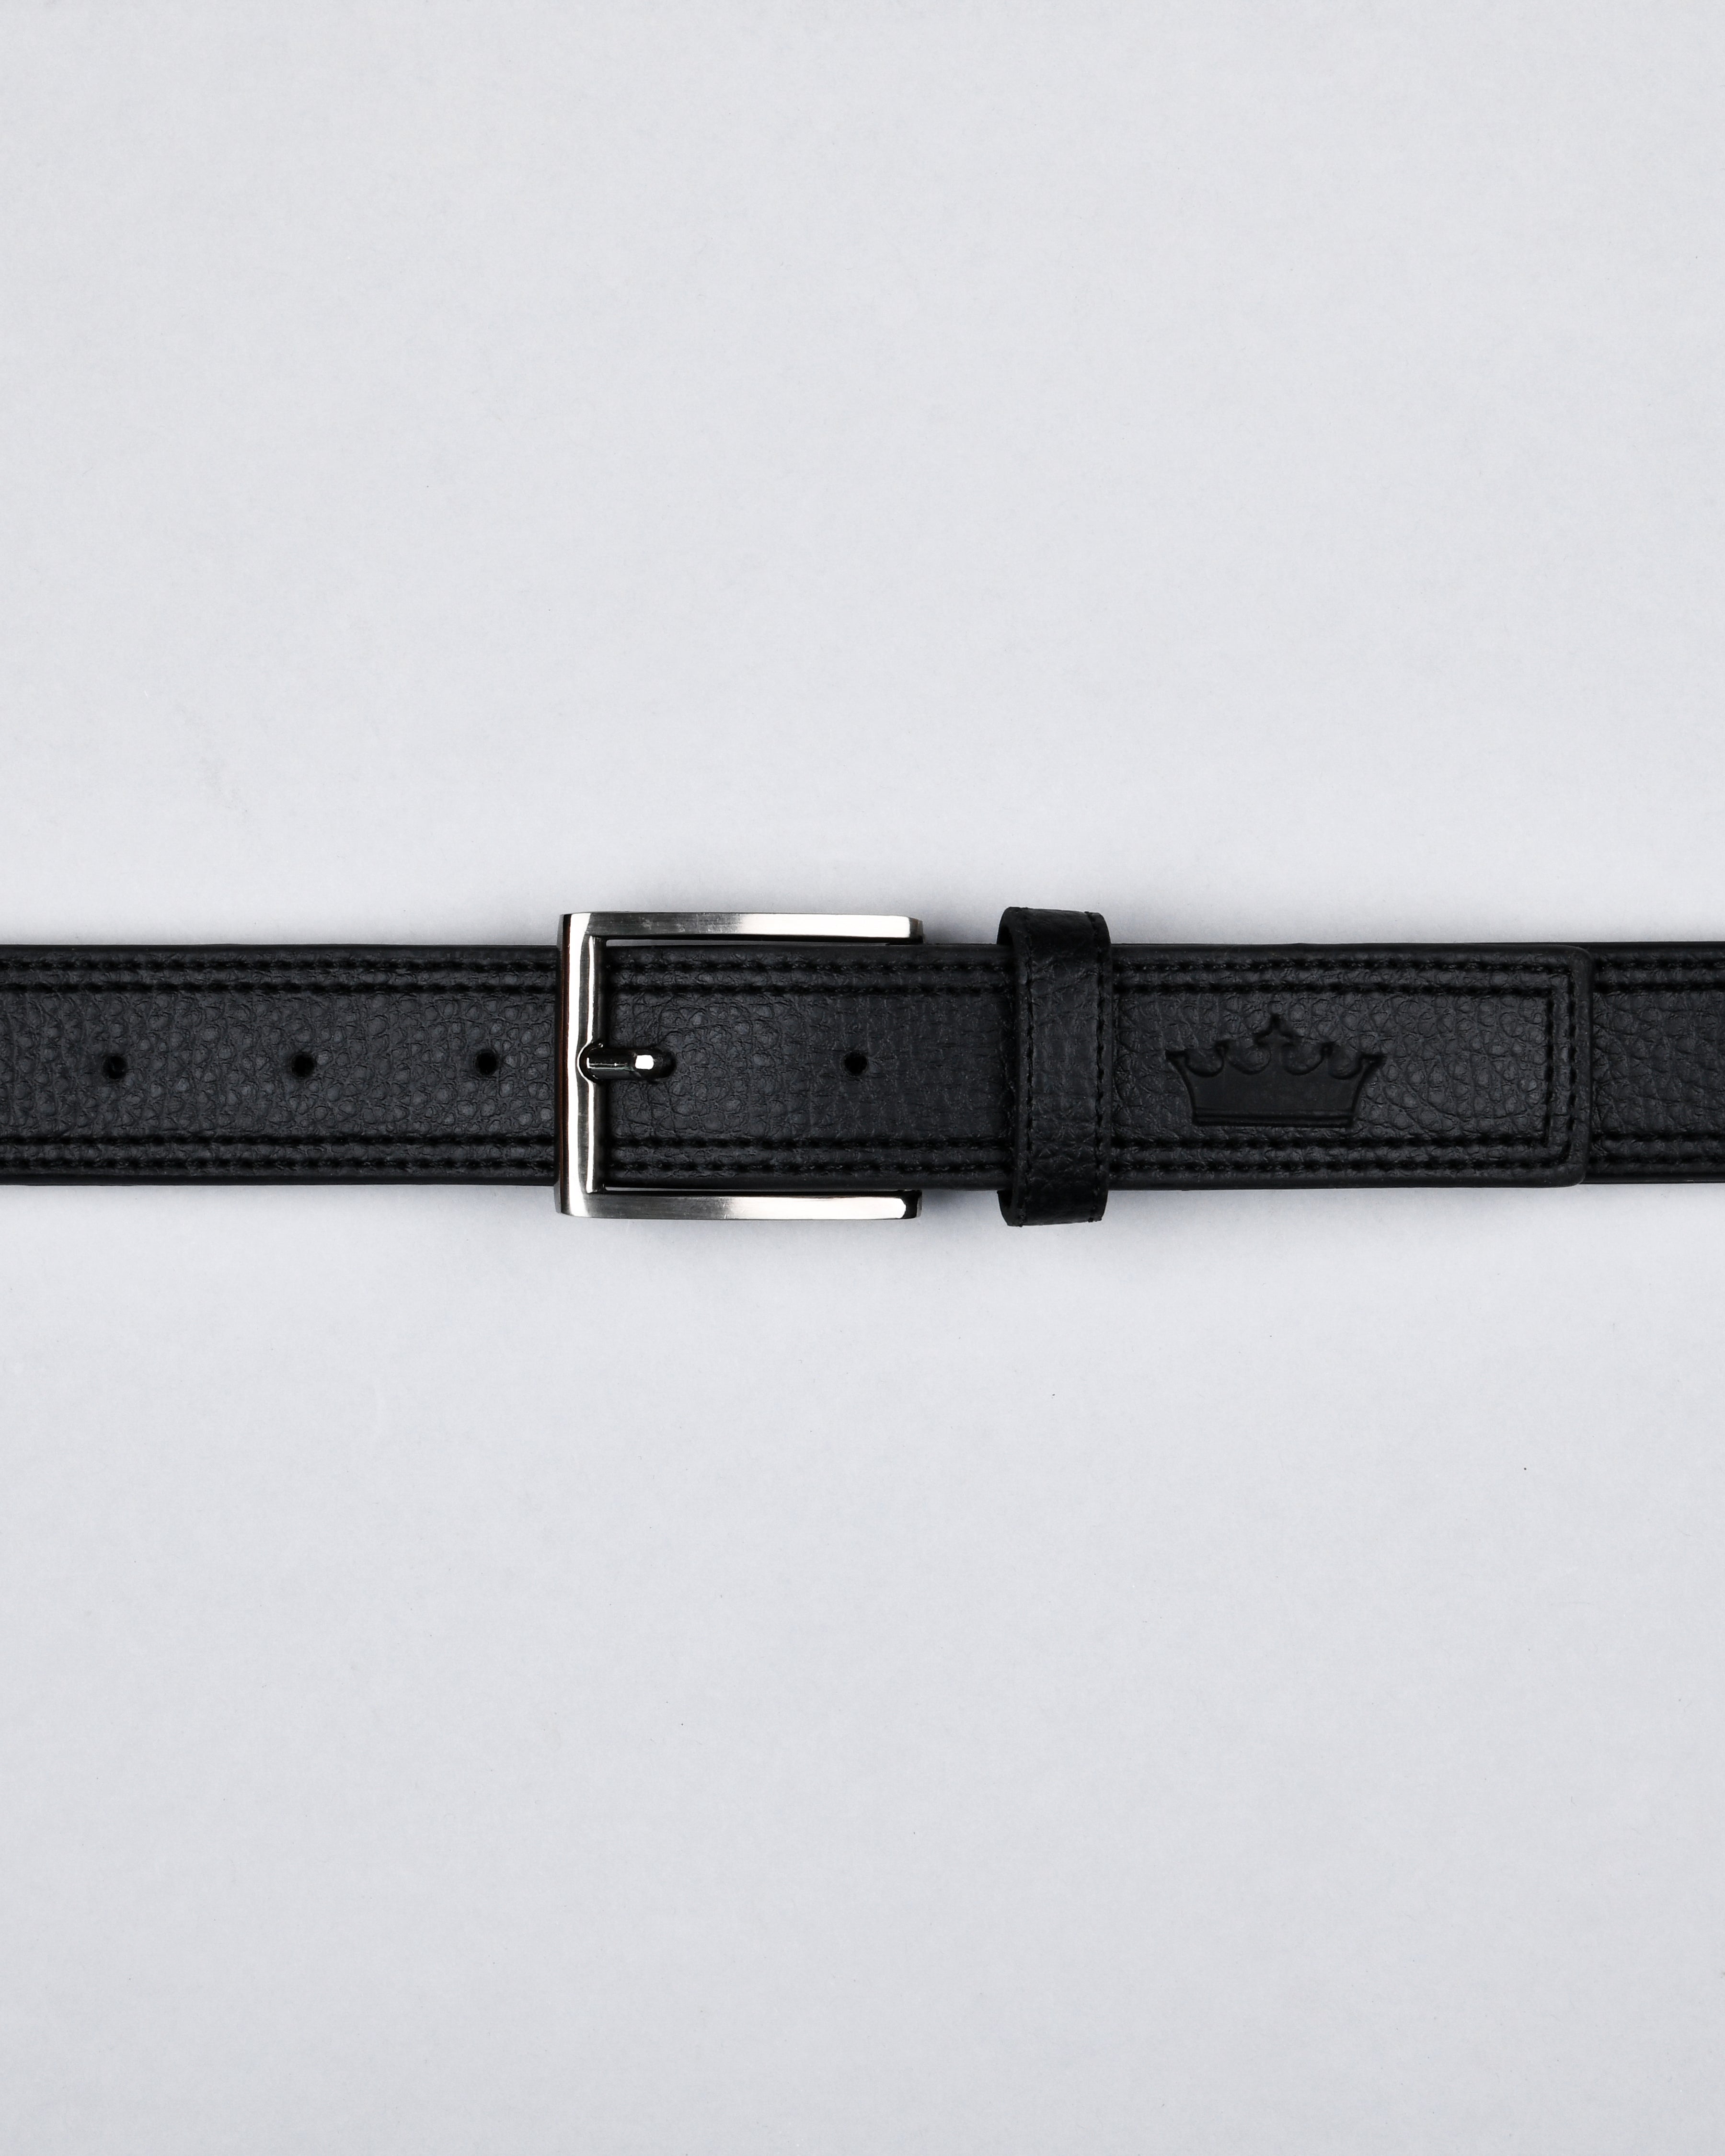 Jade Black Double Handmade Stitched Vegan Leather Handcrafted Belt For Men BT19-28, BT19-30, BT19-36, BT19-38, BT19-32, BT19-34